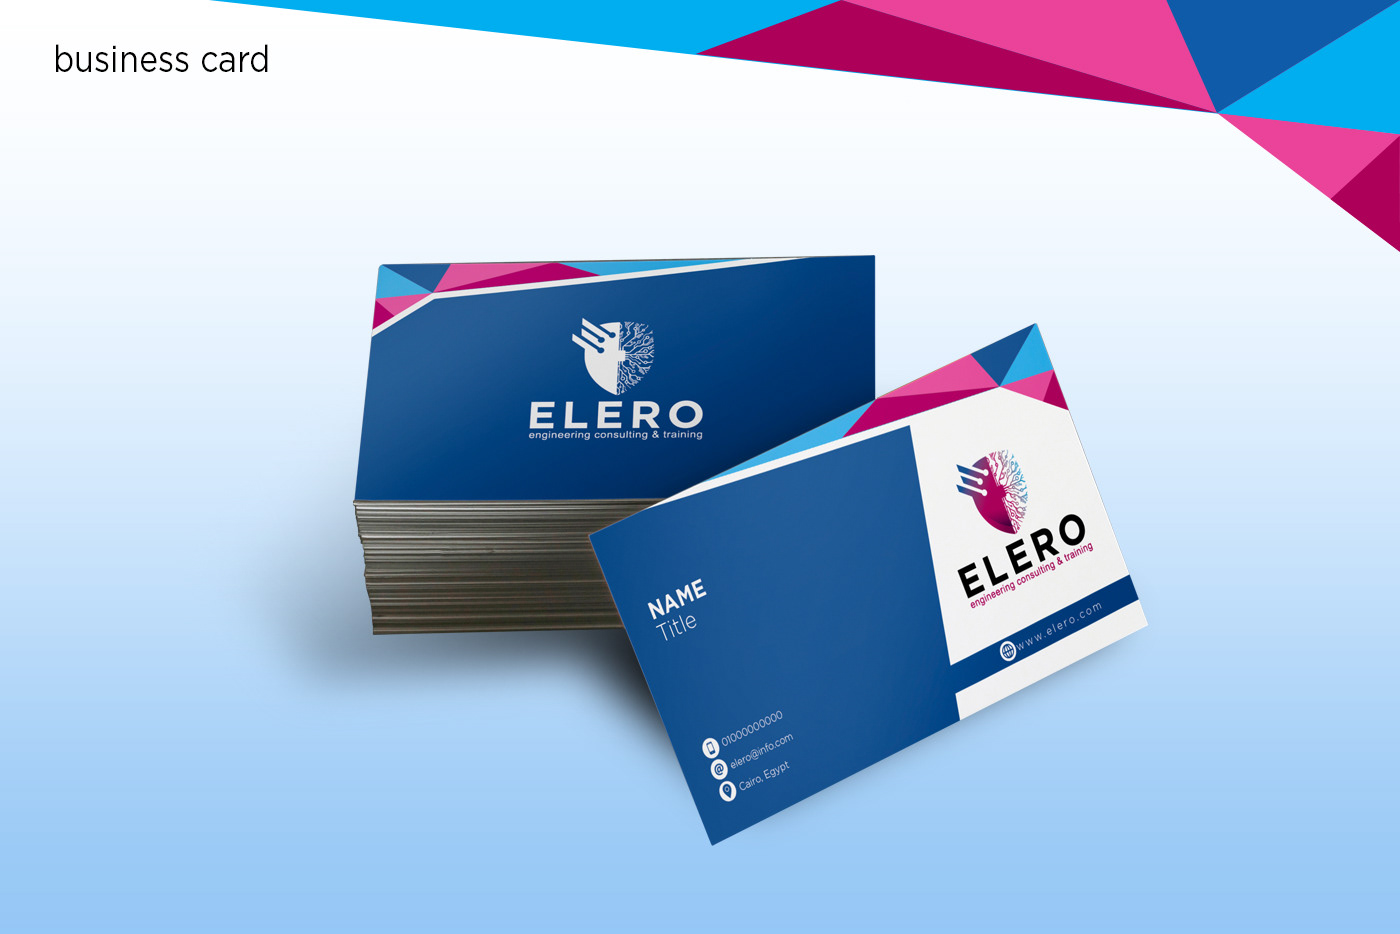 elero security IT informationtechnology safety branding  logo idintty identity shield